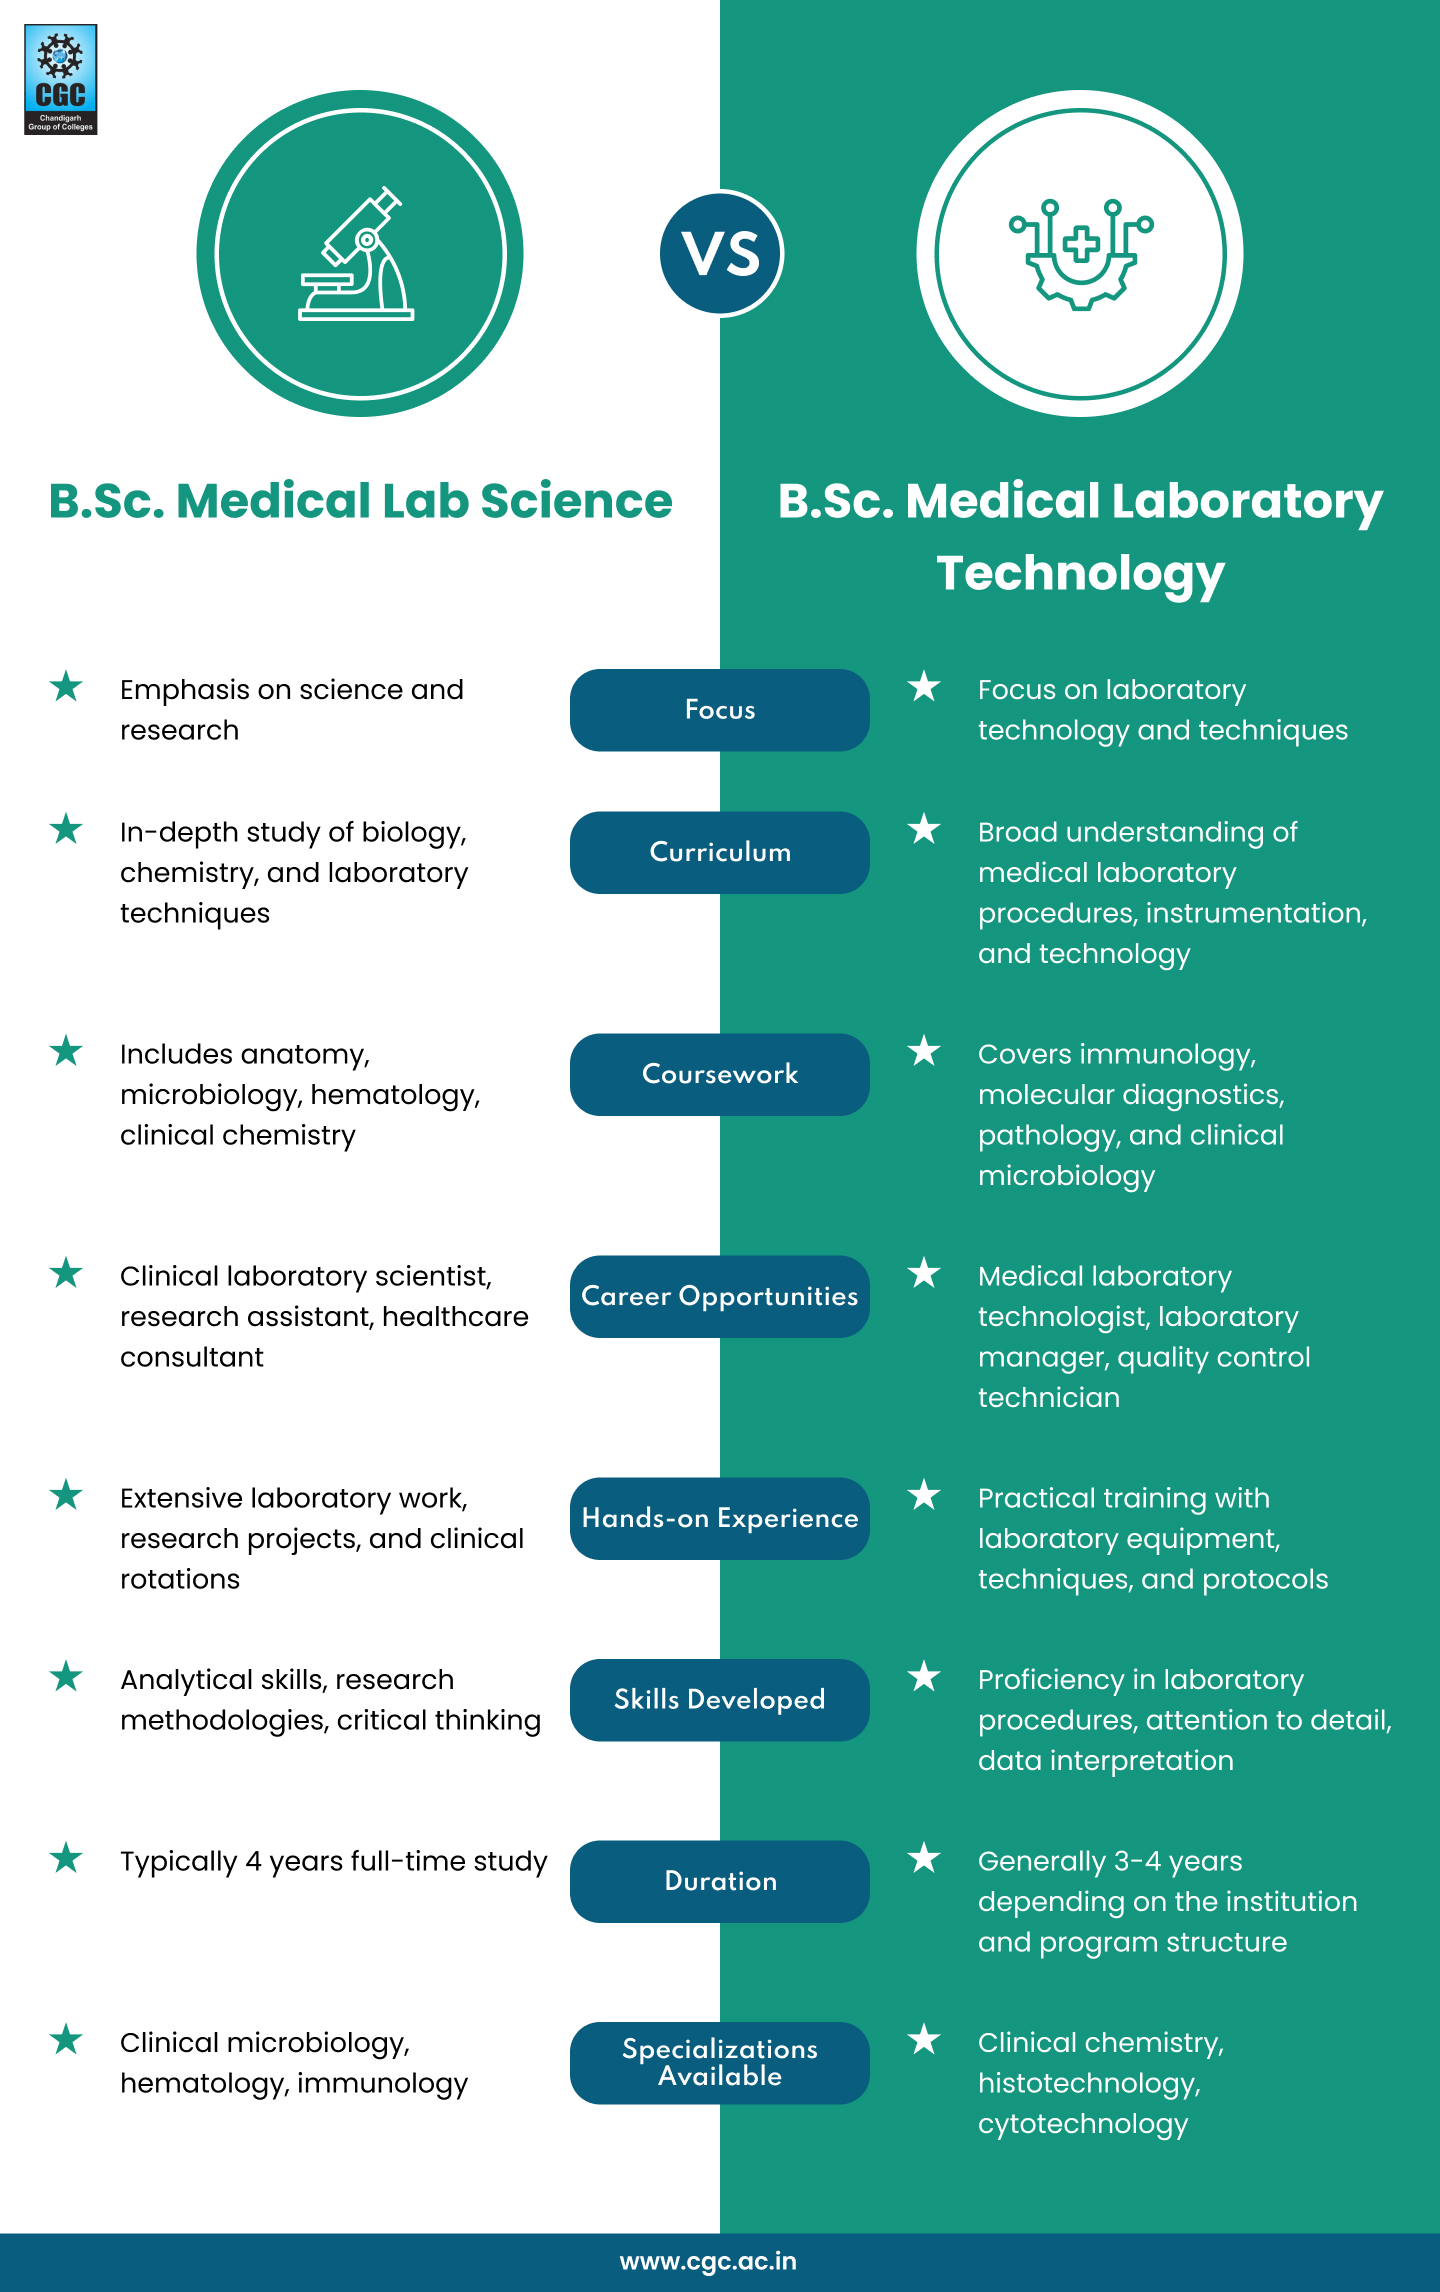 B.Sc. Medical Lab Science vs B.Sc. Medical Laboratory Technology